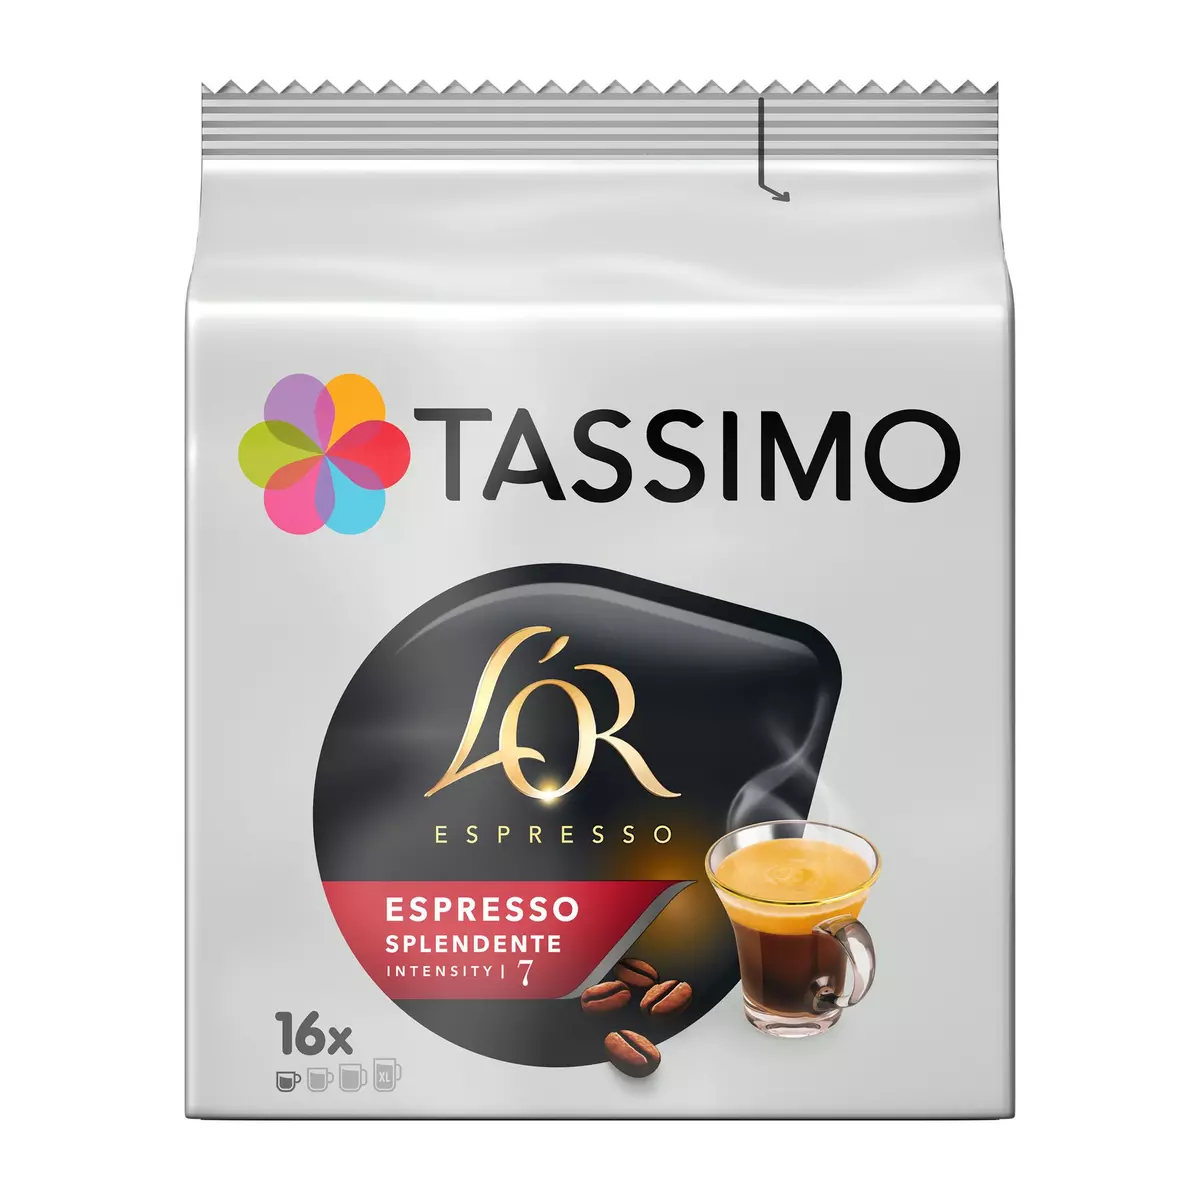 TASSIMO Dosettes de café L'Or espresso splendente intensité 7 16 dosettes 104g